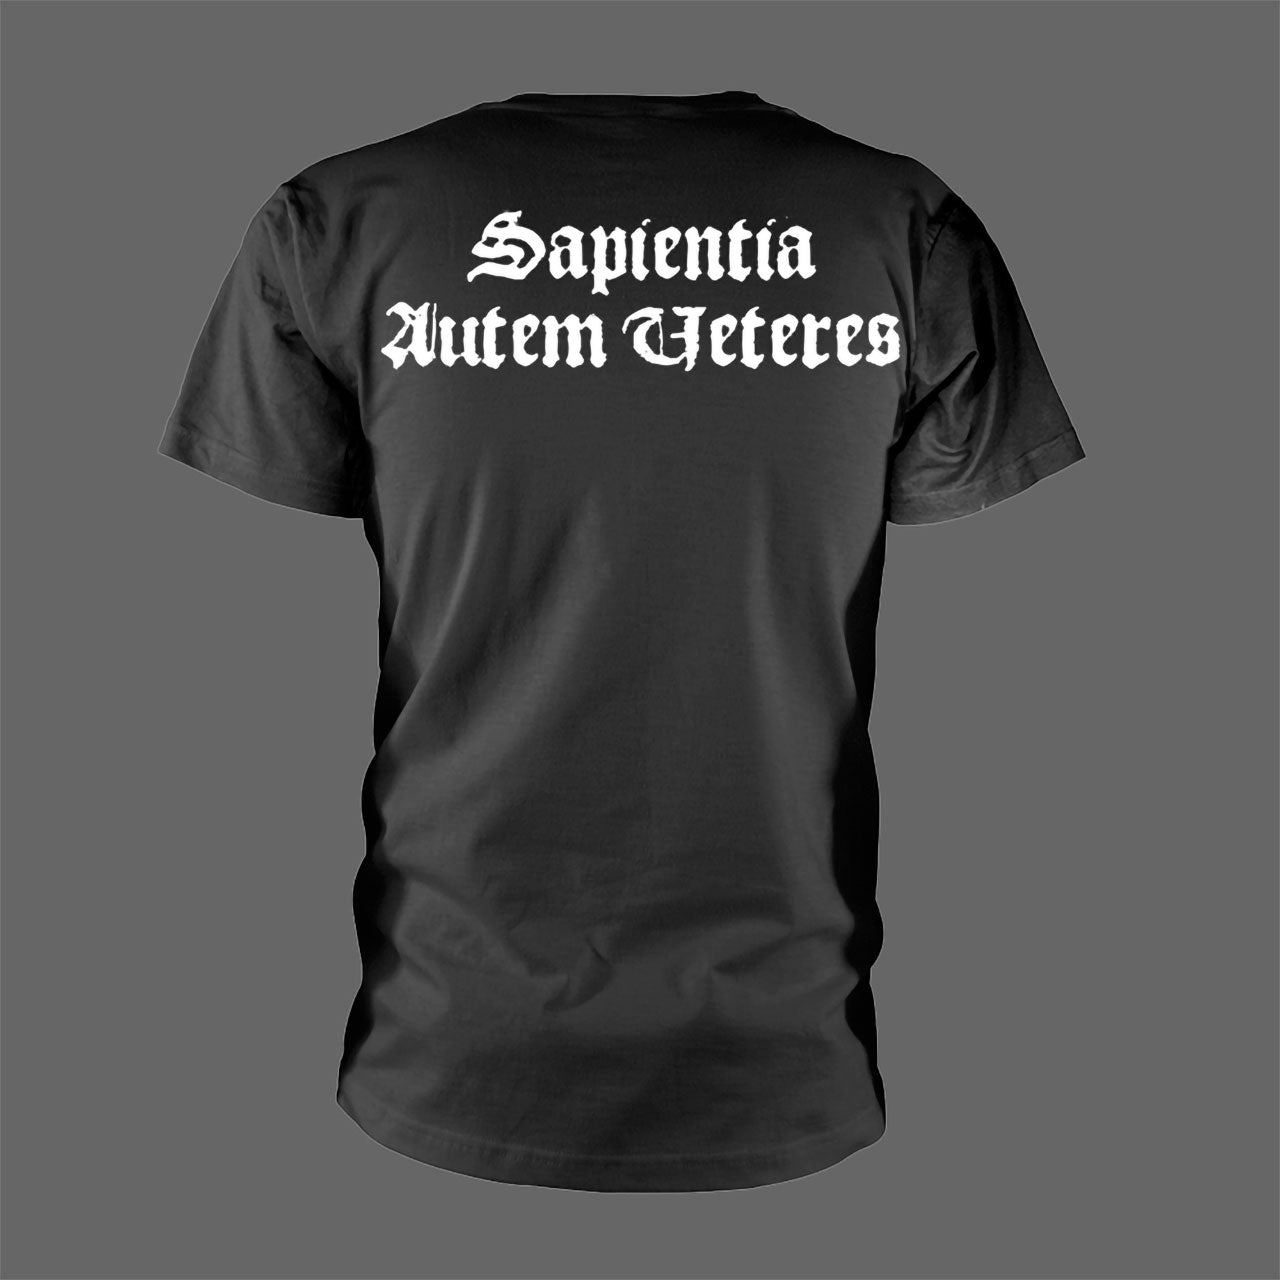 Vltimas - Sapientia Autem Ueteres (T-Shirt)